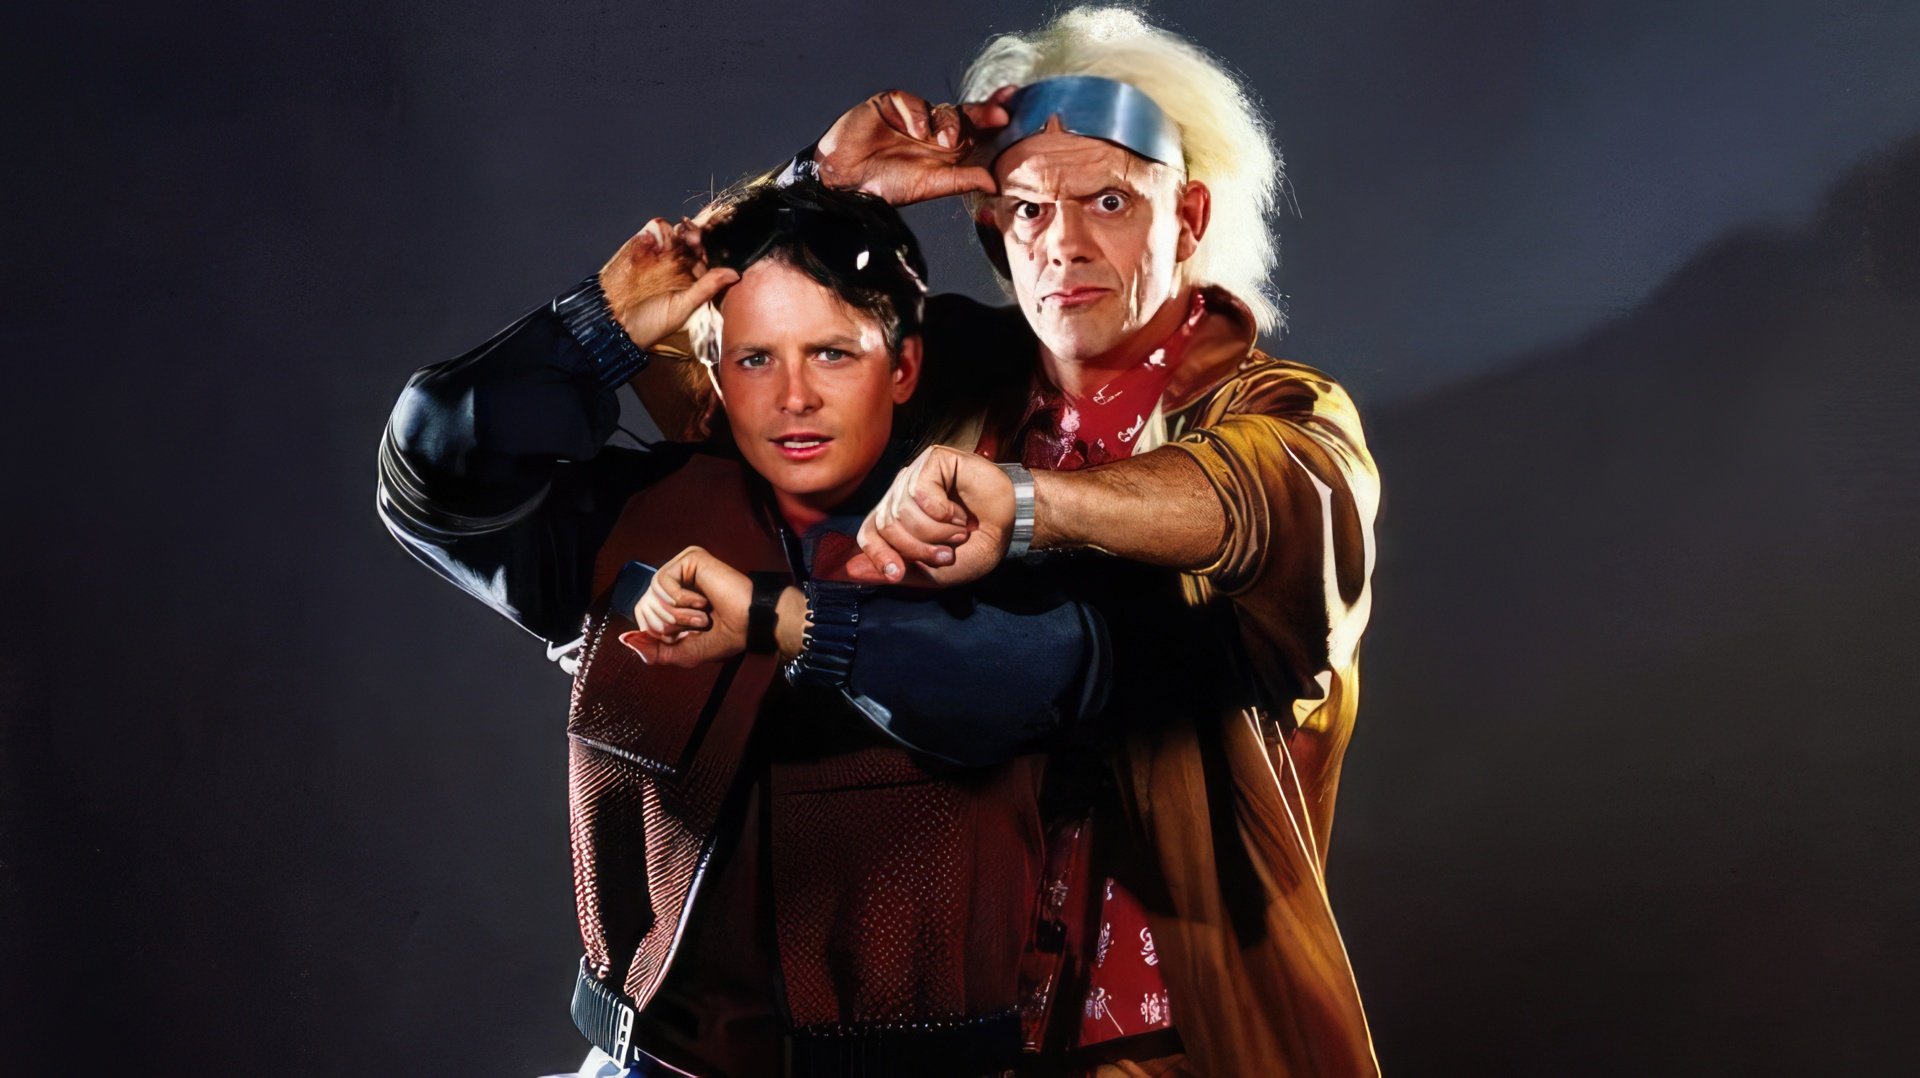 Michael J. Fox and Christopher Lloyd